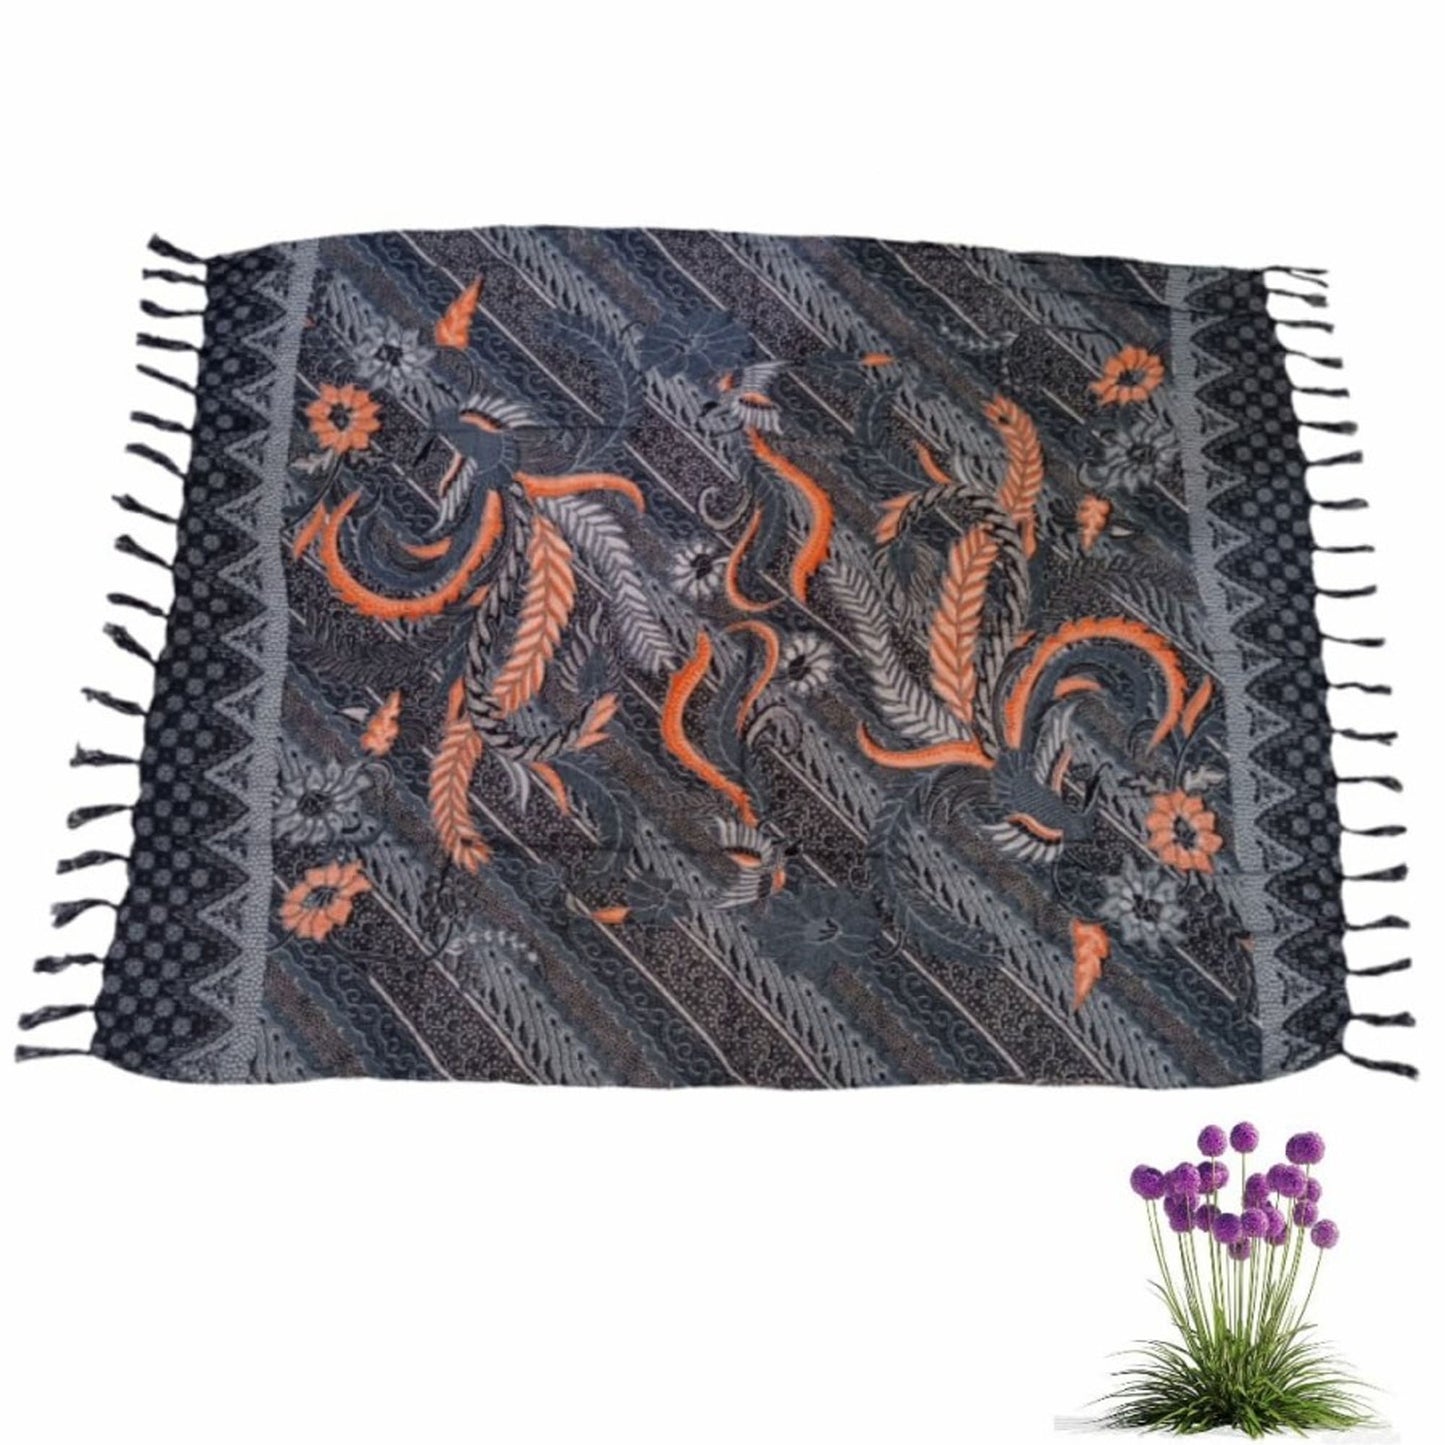 Vacation Style: Beach Motif Batik Fabric for a Trendy Beach Experience, Sarong, Beach Cover-Up, Balinese Beach Wrap, Beach Sarong, Pareo